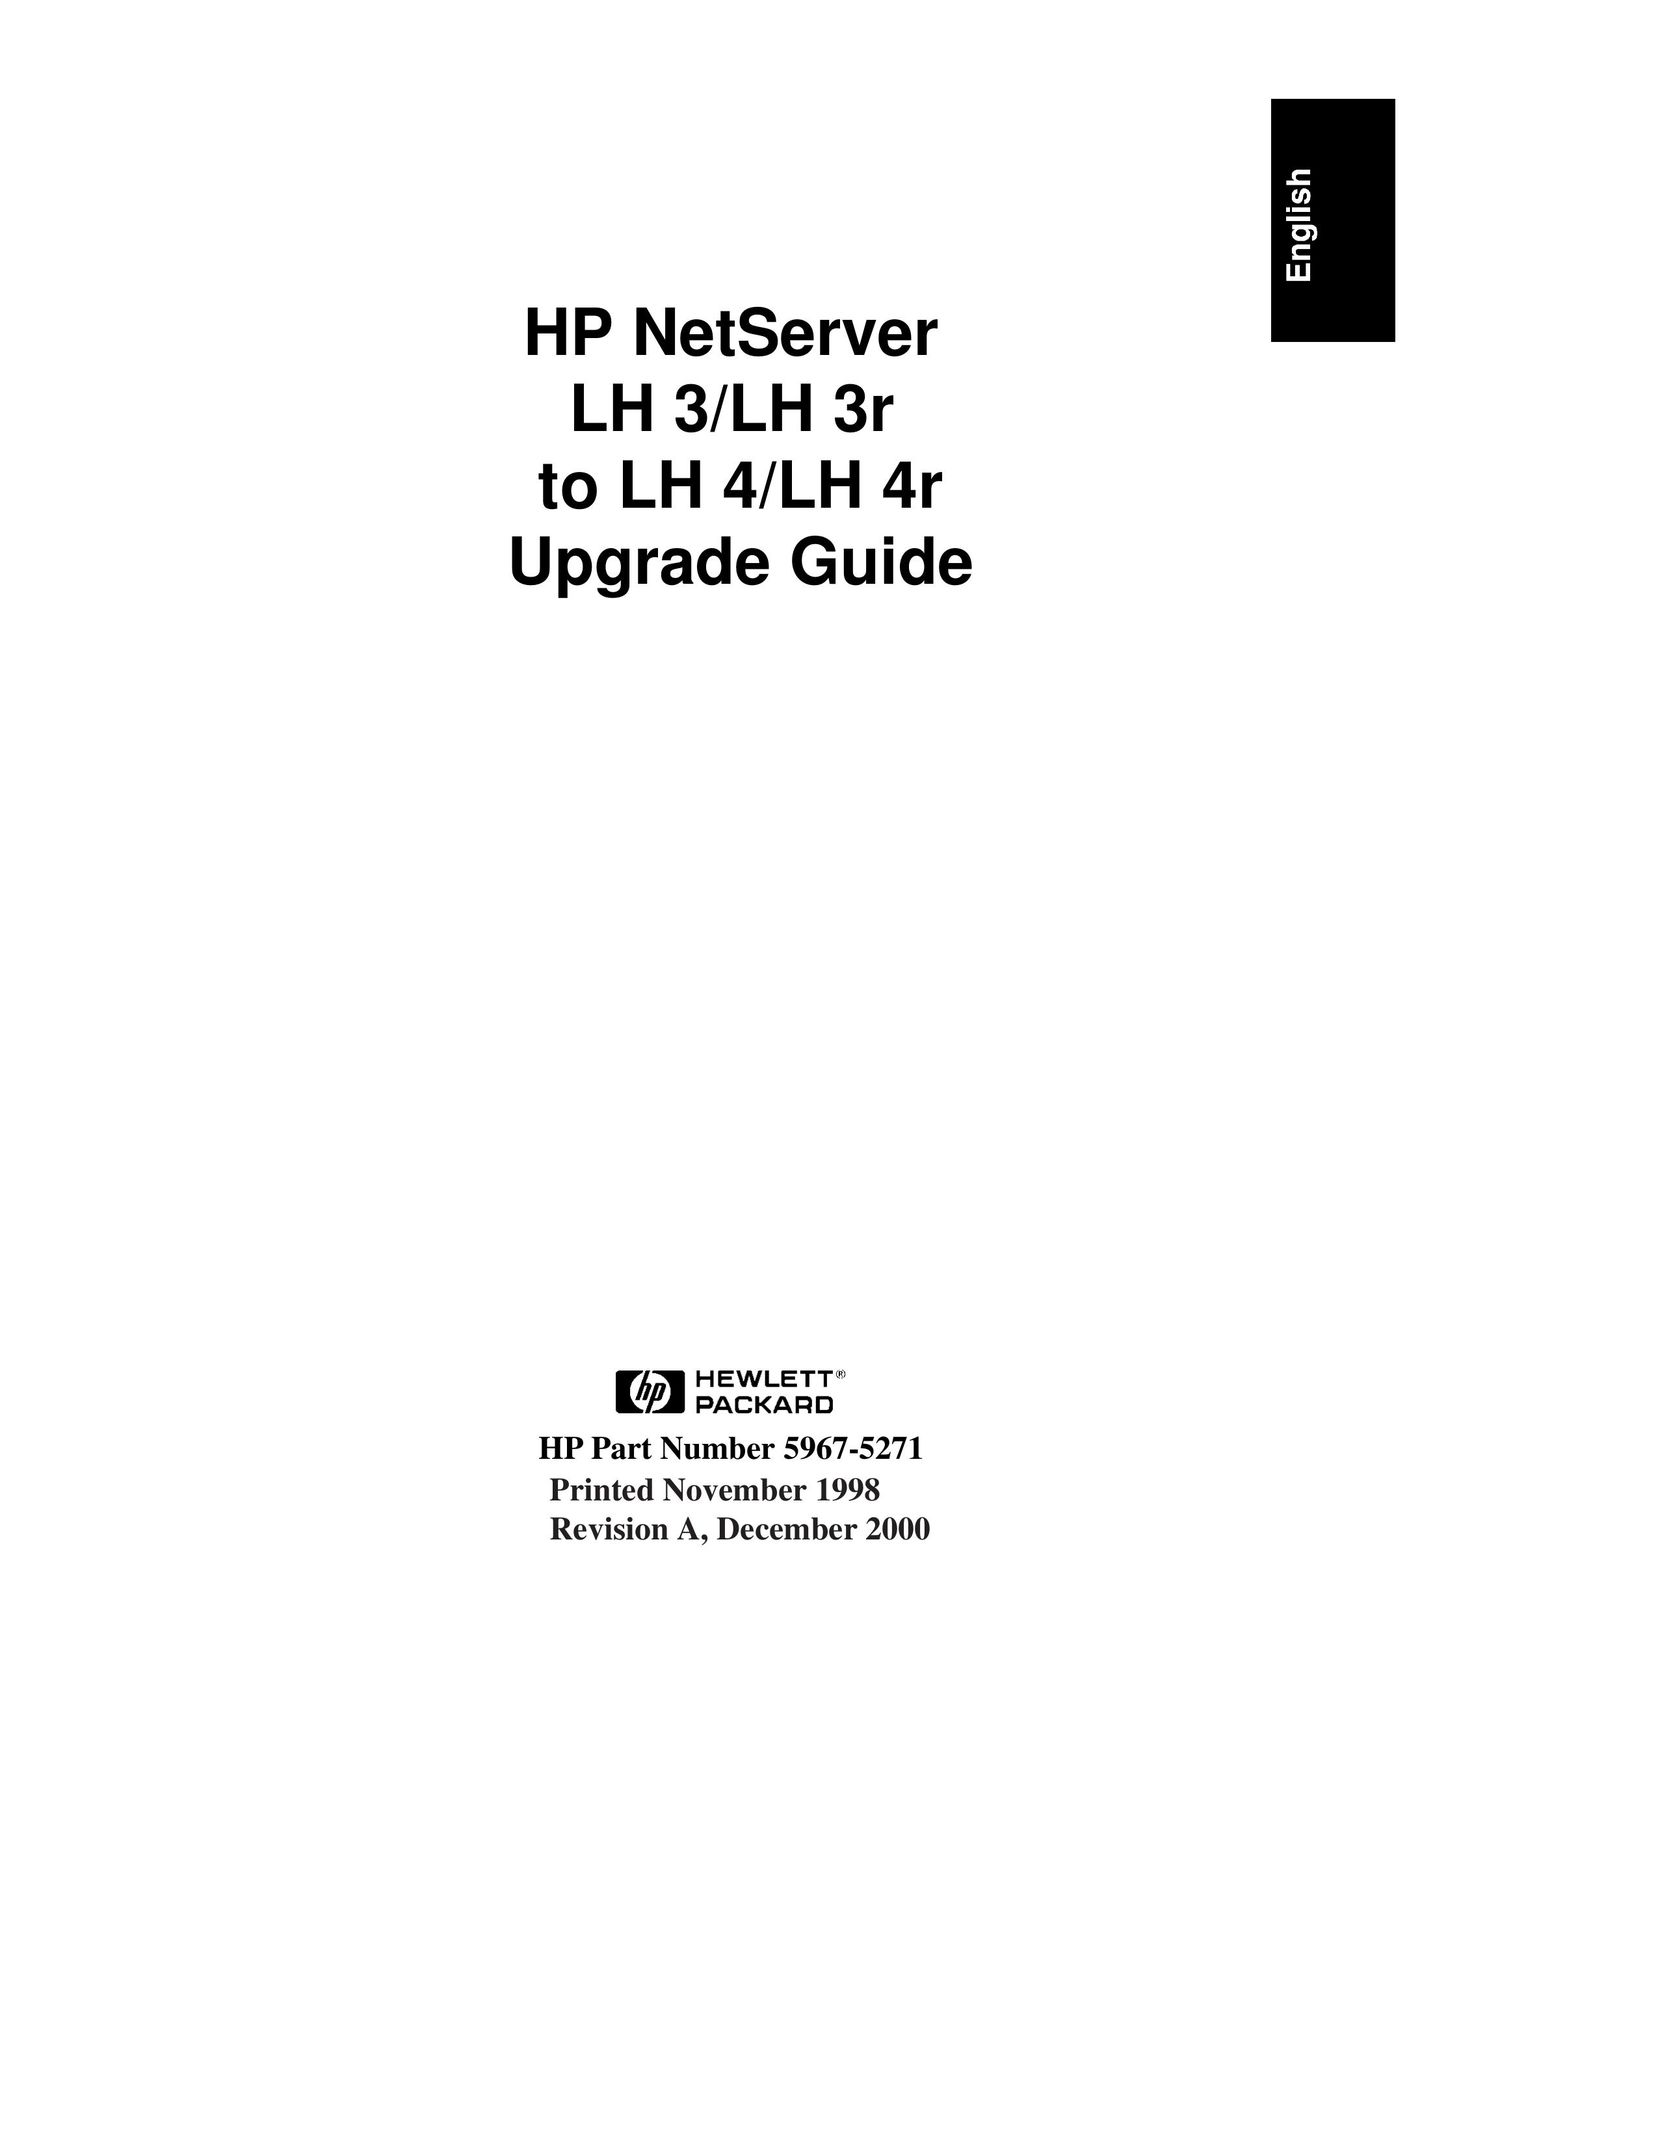 HP (Hewlett-Packard) NetServewr Network Cables User Manual